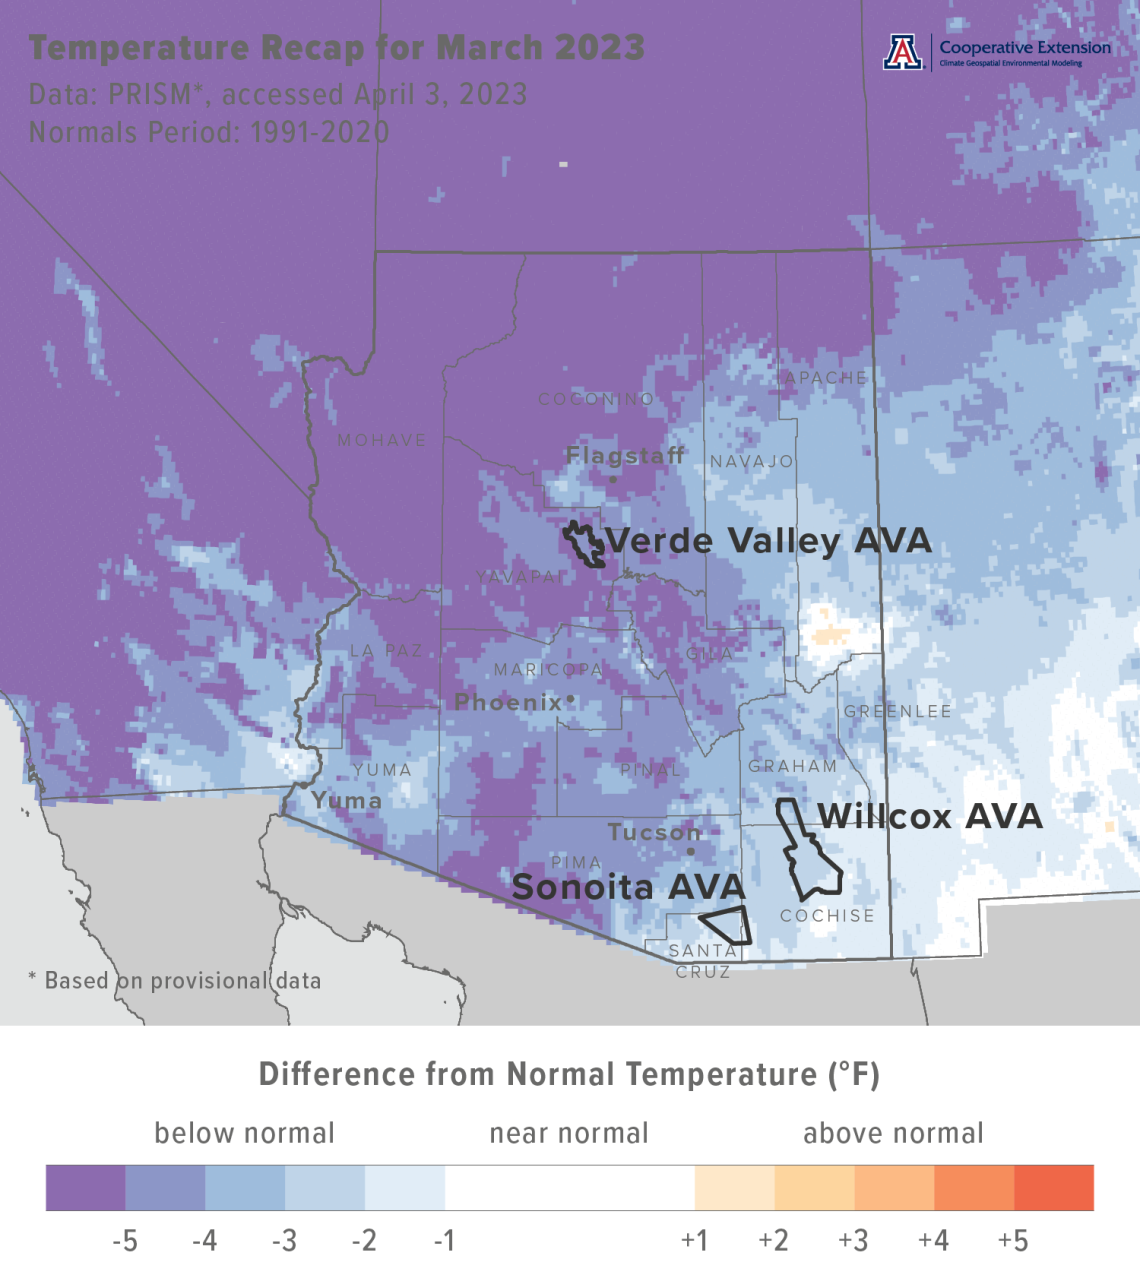 March 2023 precipitation map for Arizona